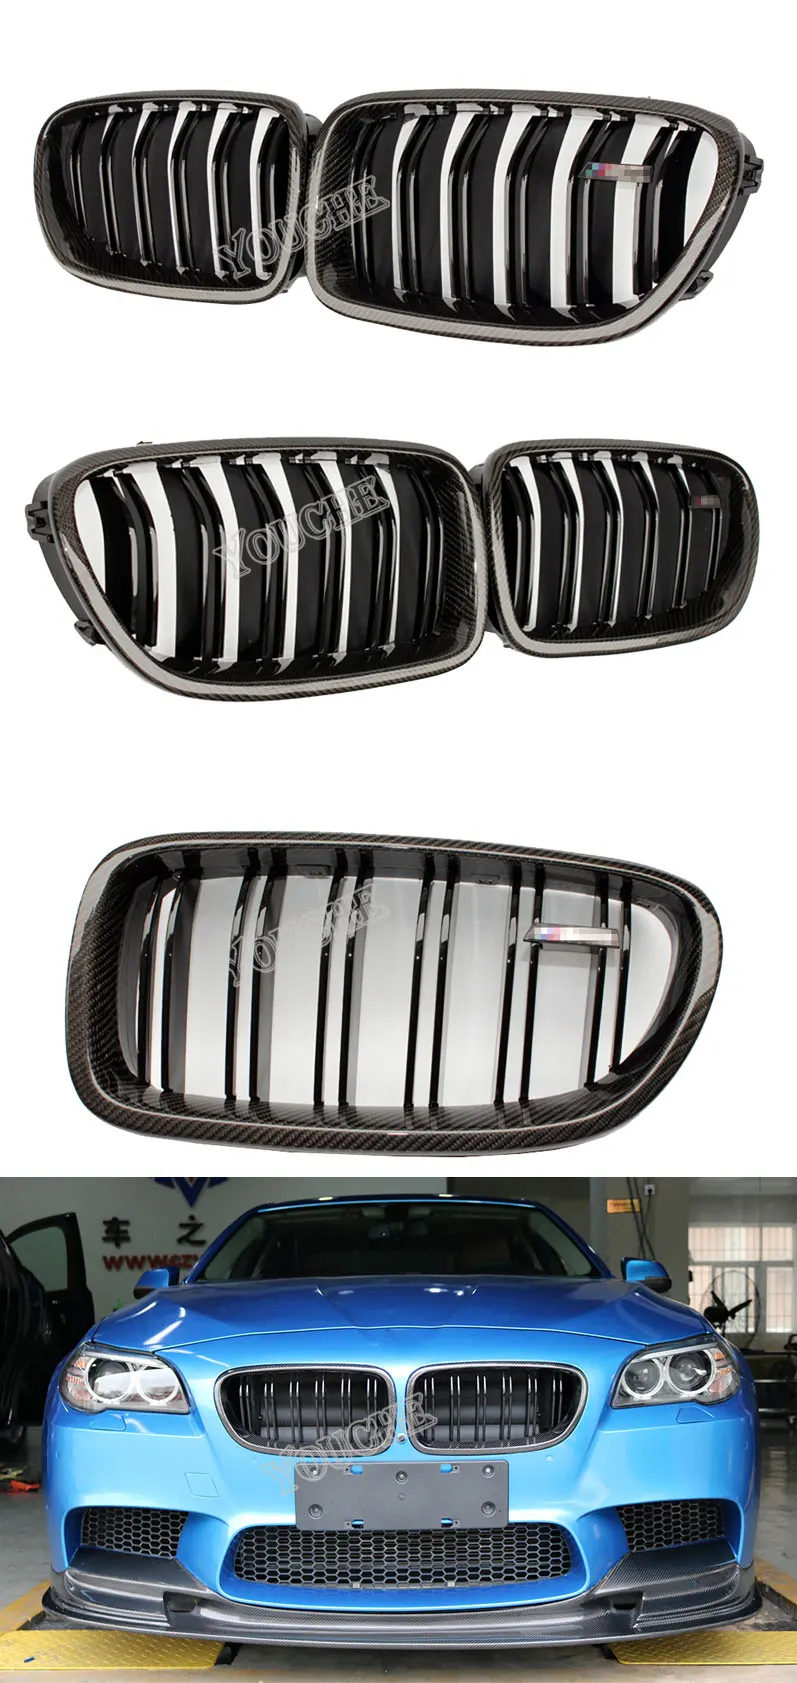 F10 ABS Глянцевая черная M цветная углеродная волокнистая решетка для BMW F10 F11 5 серии 2010- Передняя решетка для почек 520i 523i 525i 530i 535i